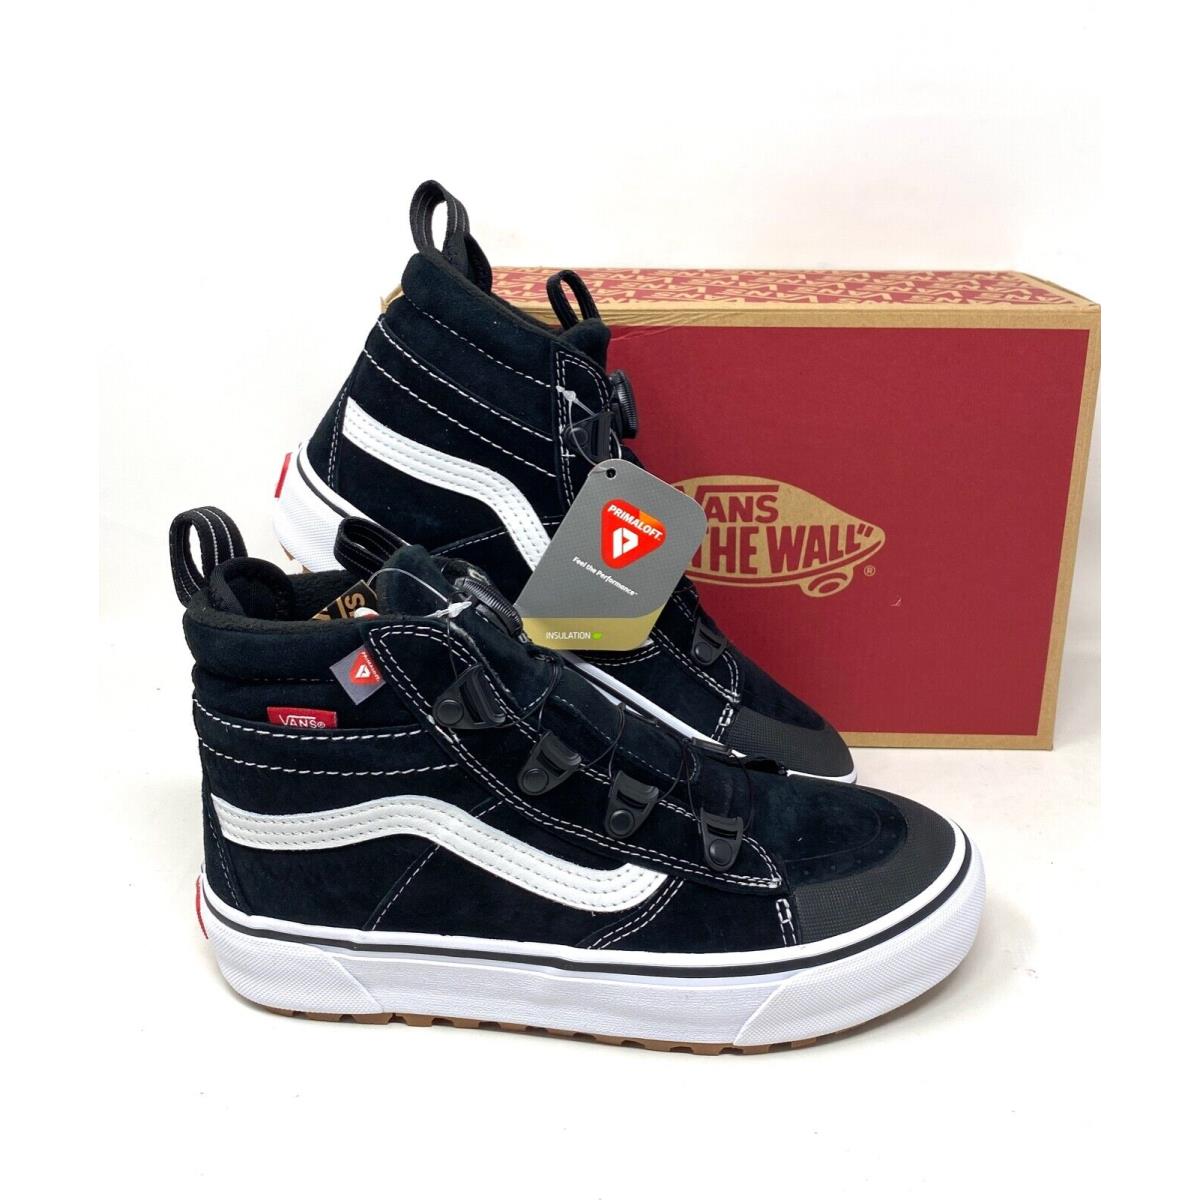 Vans Sk8-Hi Boa MTE-2 High Top Black White Suede Women Size Sneakers VN0007NMBA2